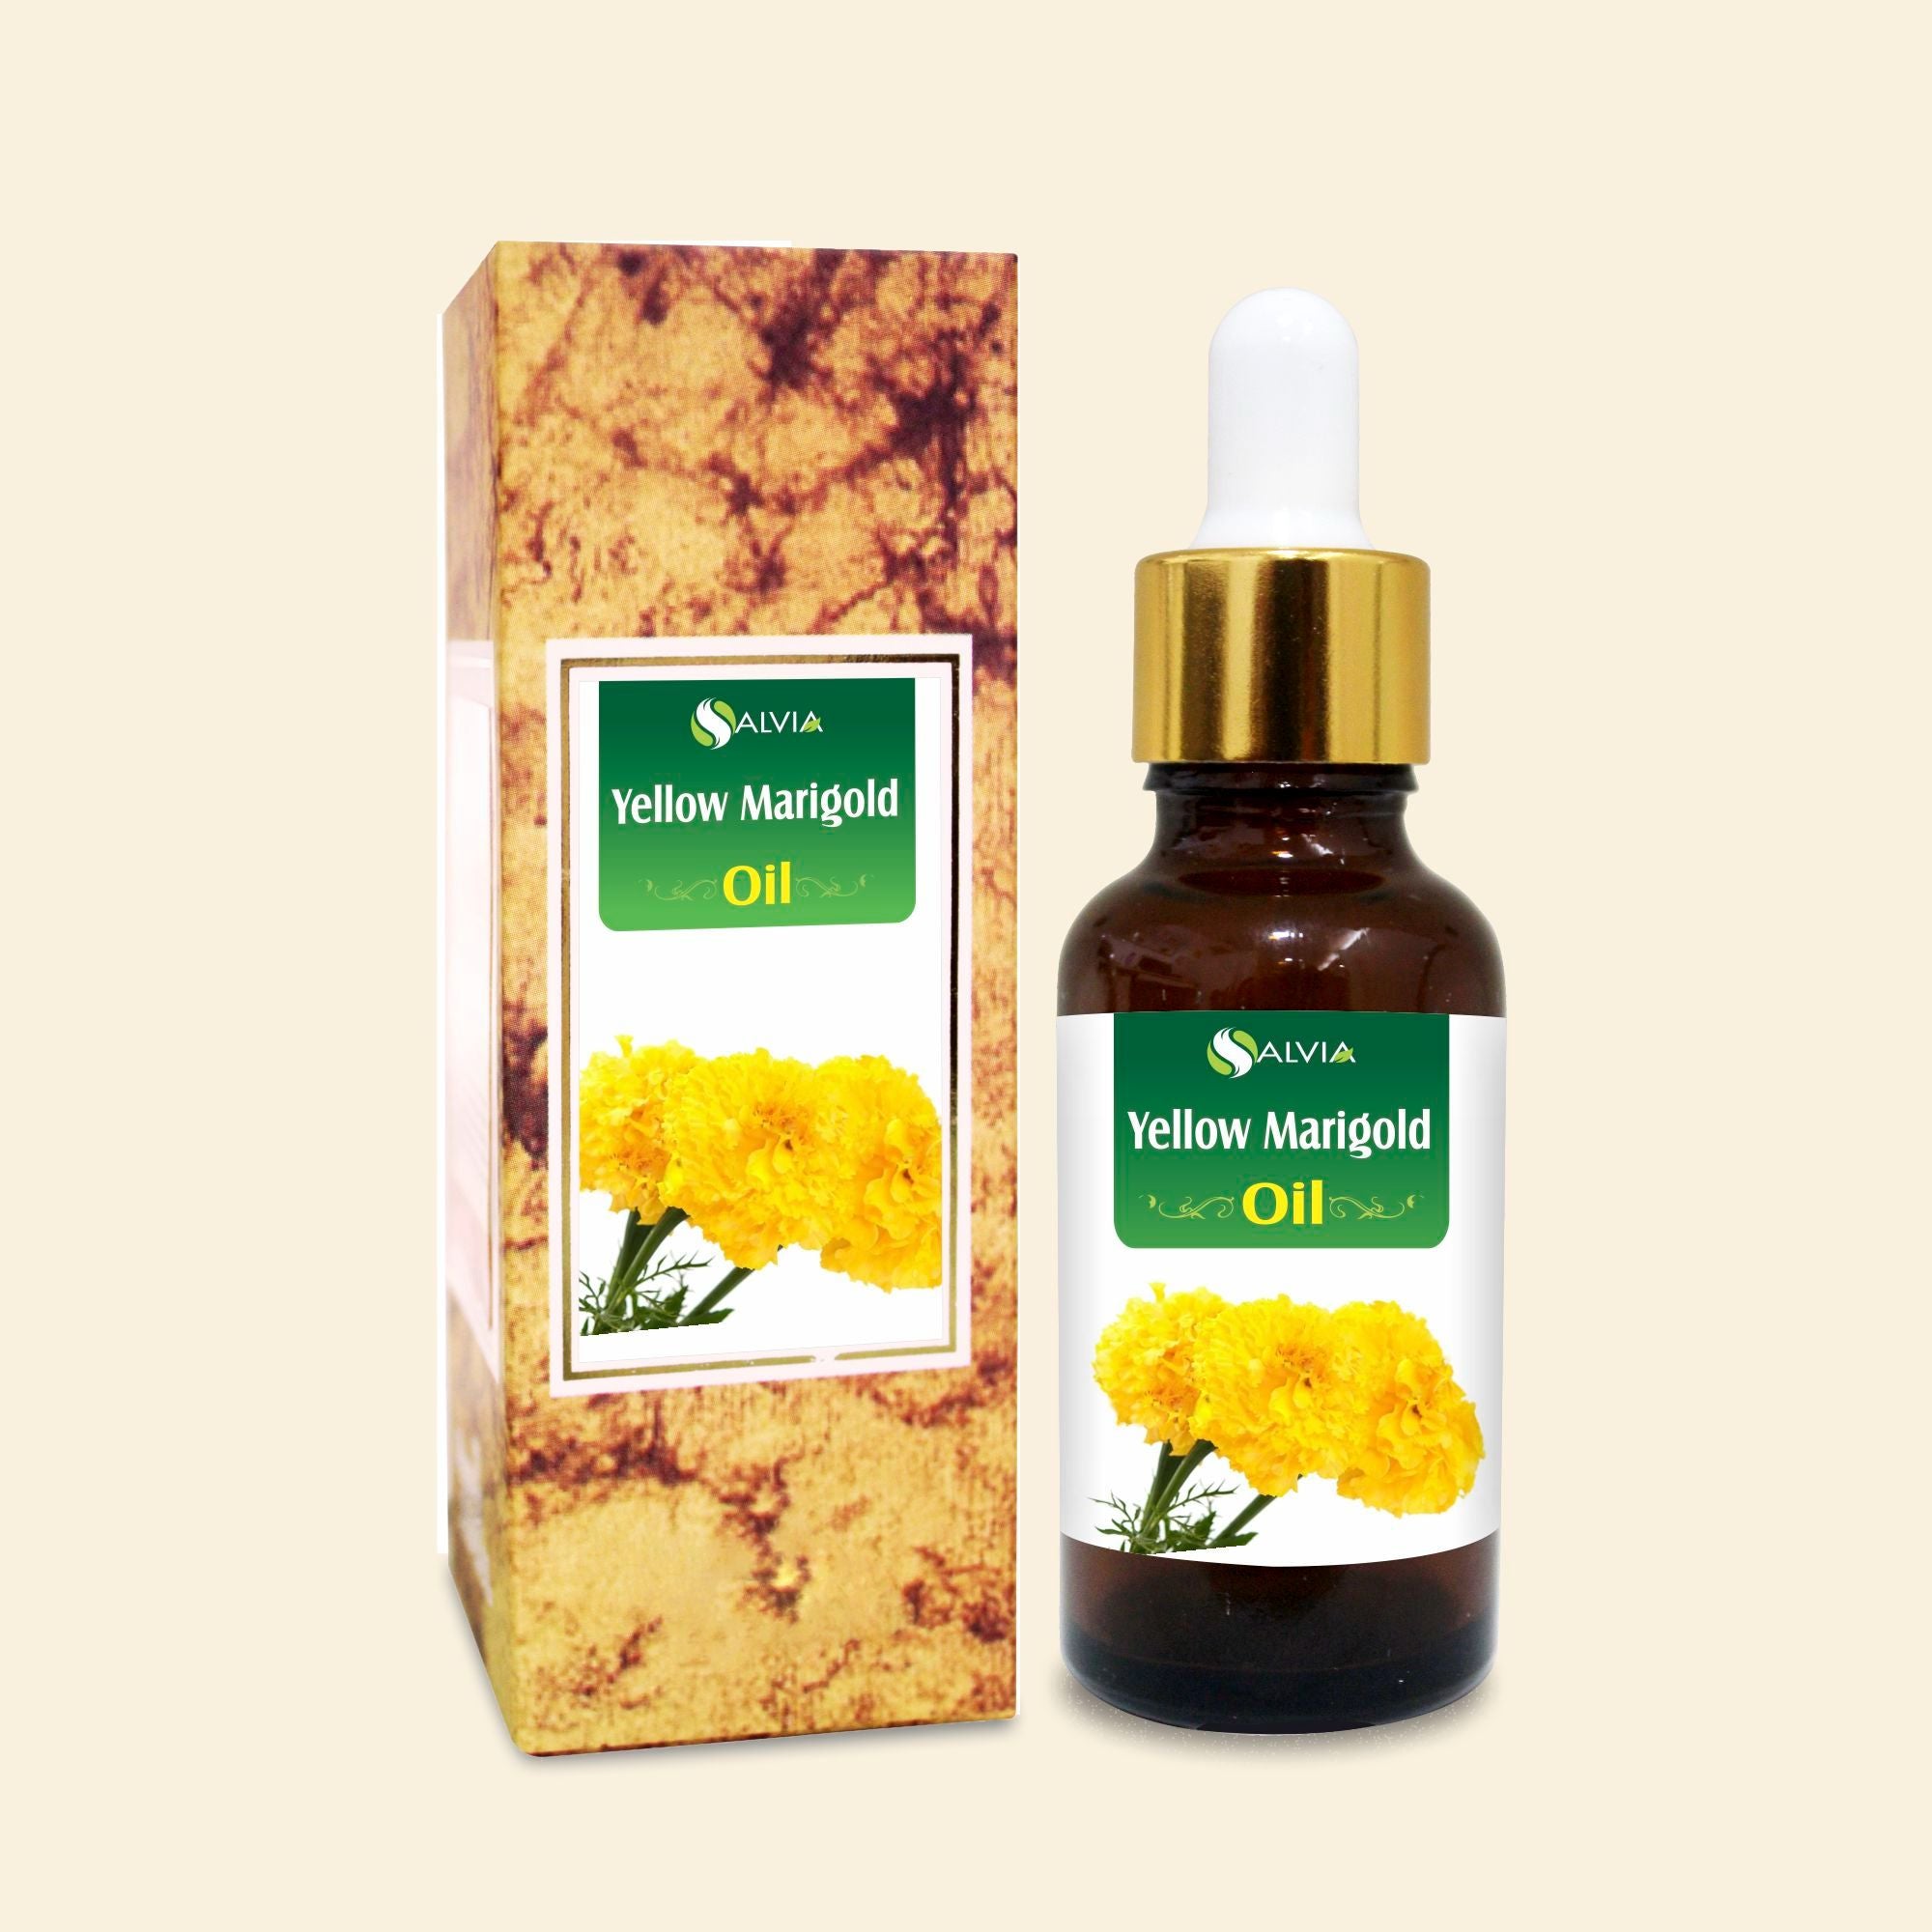 Salvia Natural Essential Oils Yellow Marigold Essential Oil